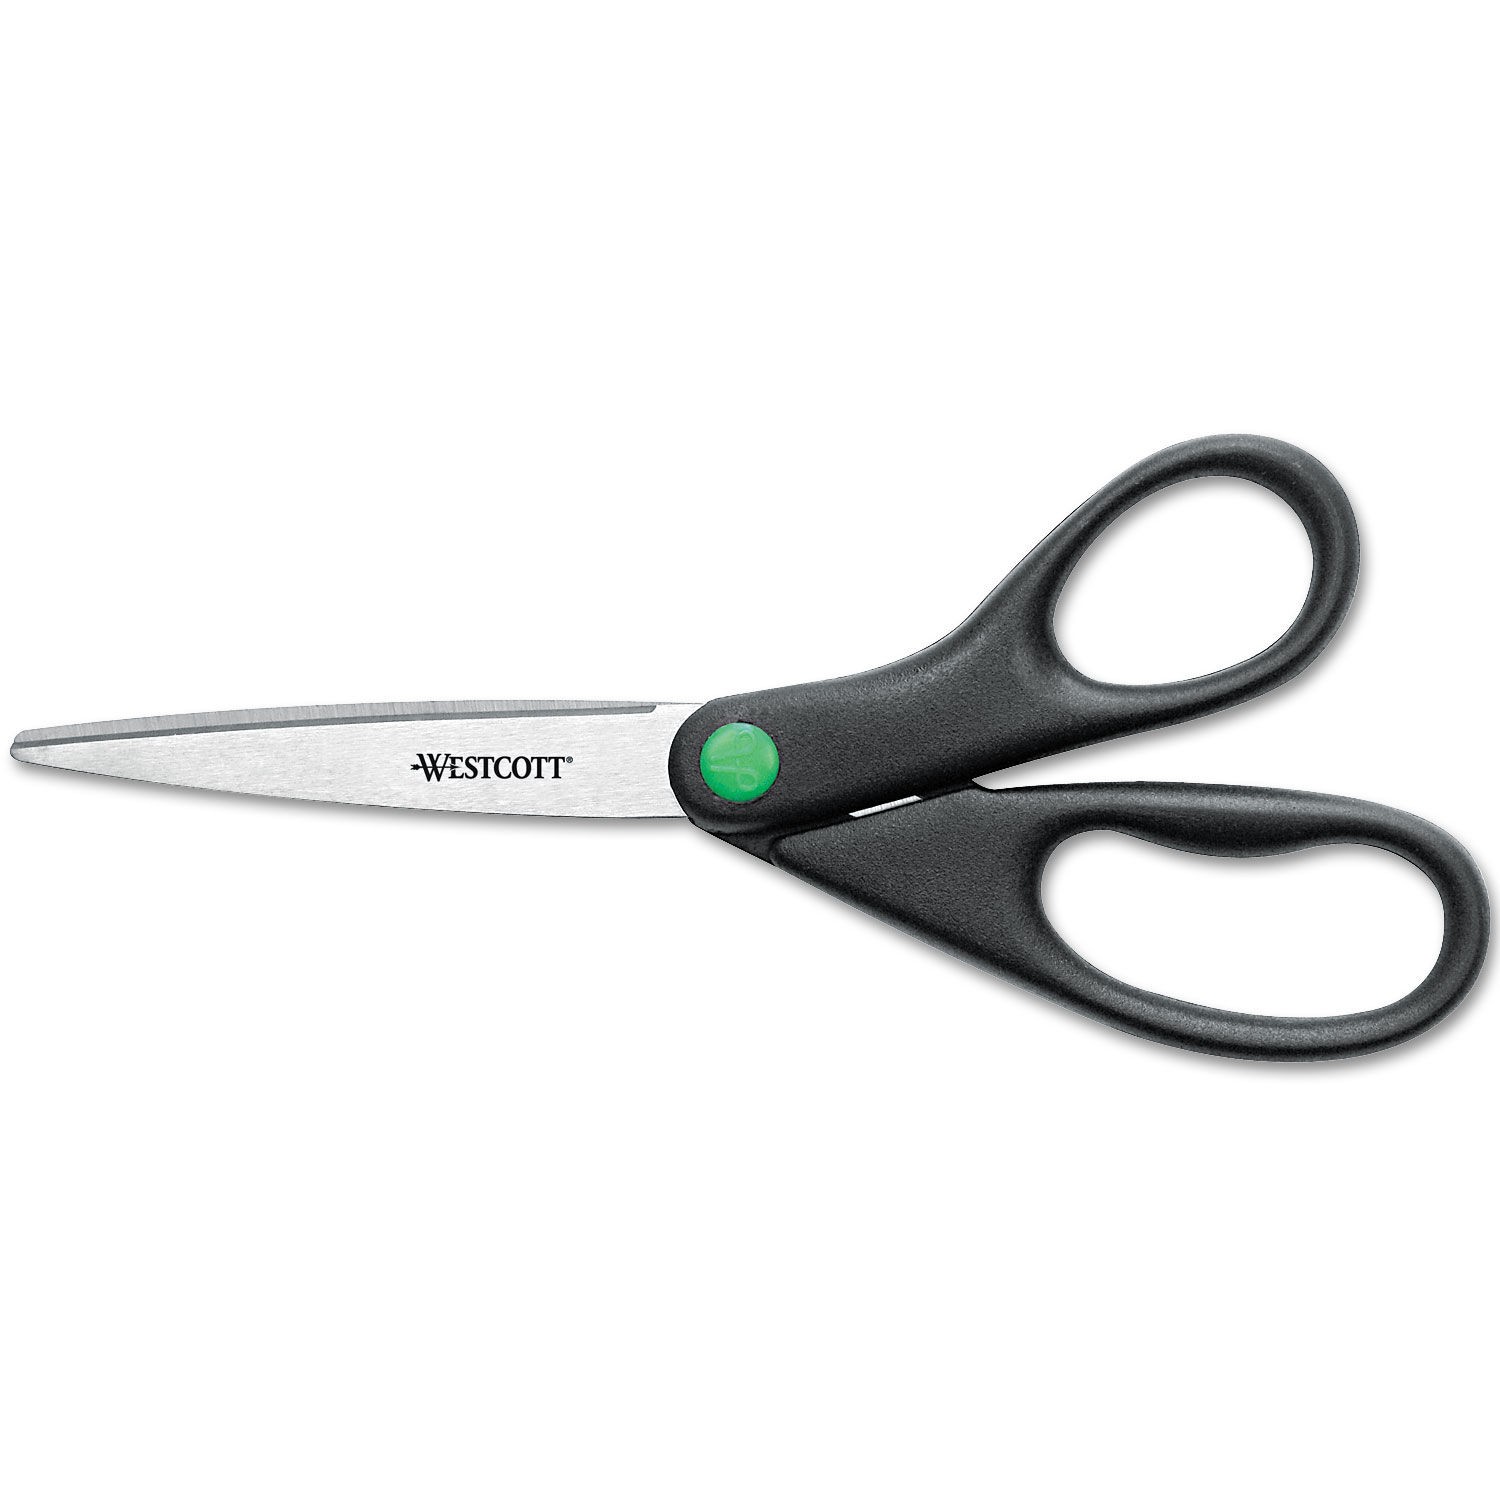 KleenEarth Scissors, 8" Long, 3.25" Cut Length, Black Handles